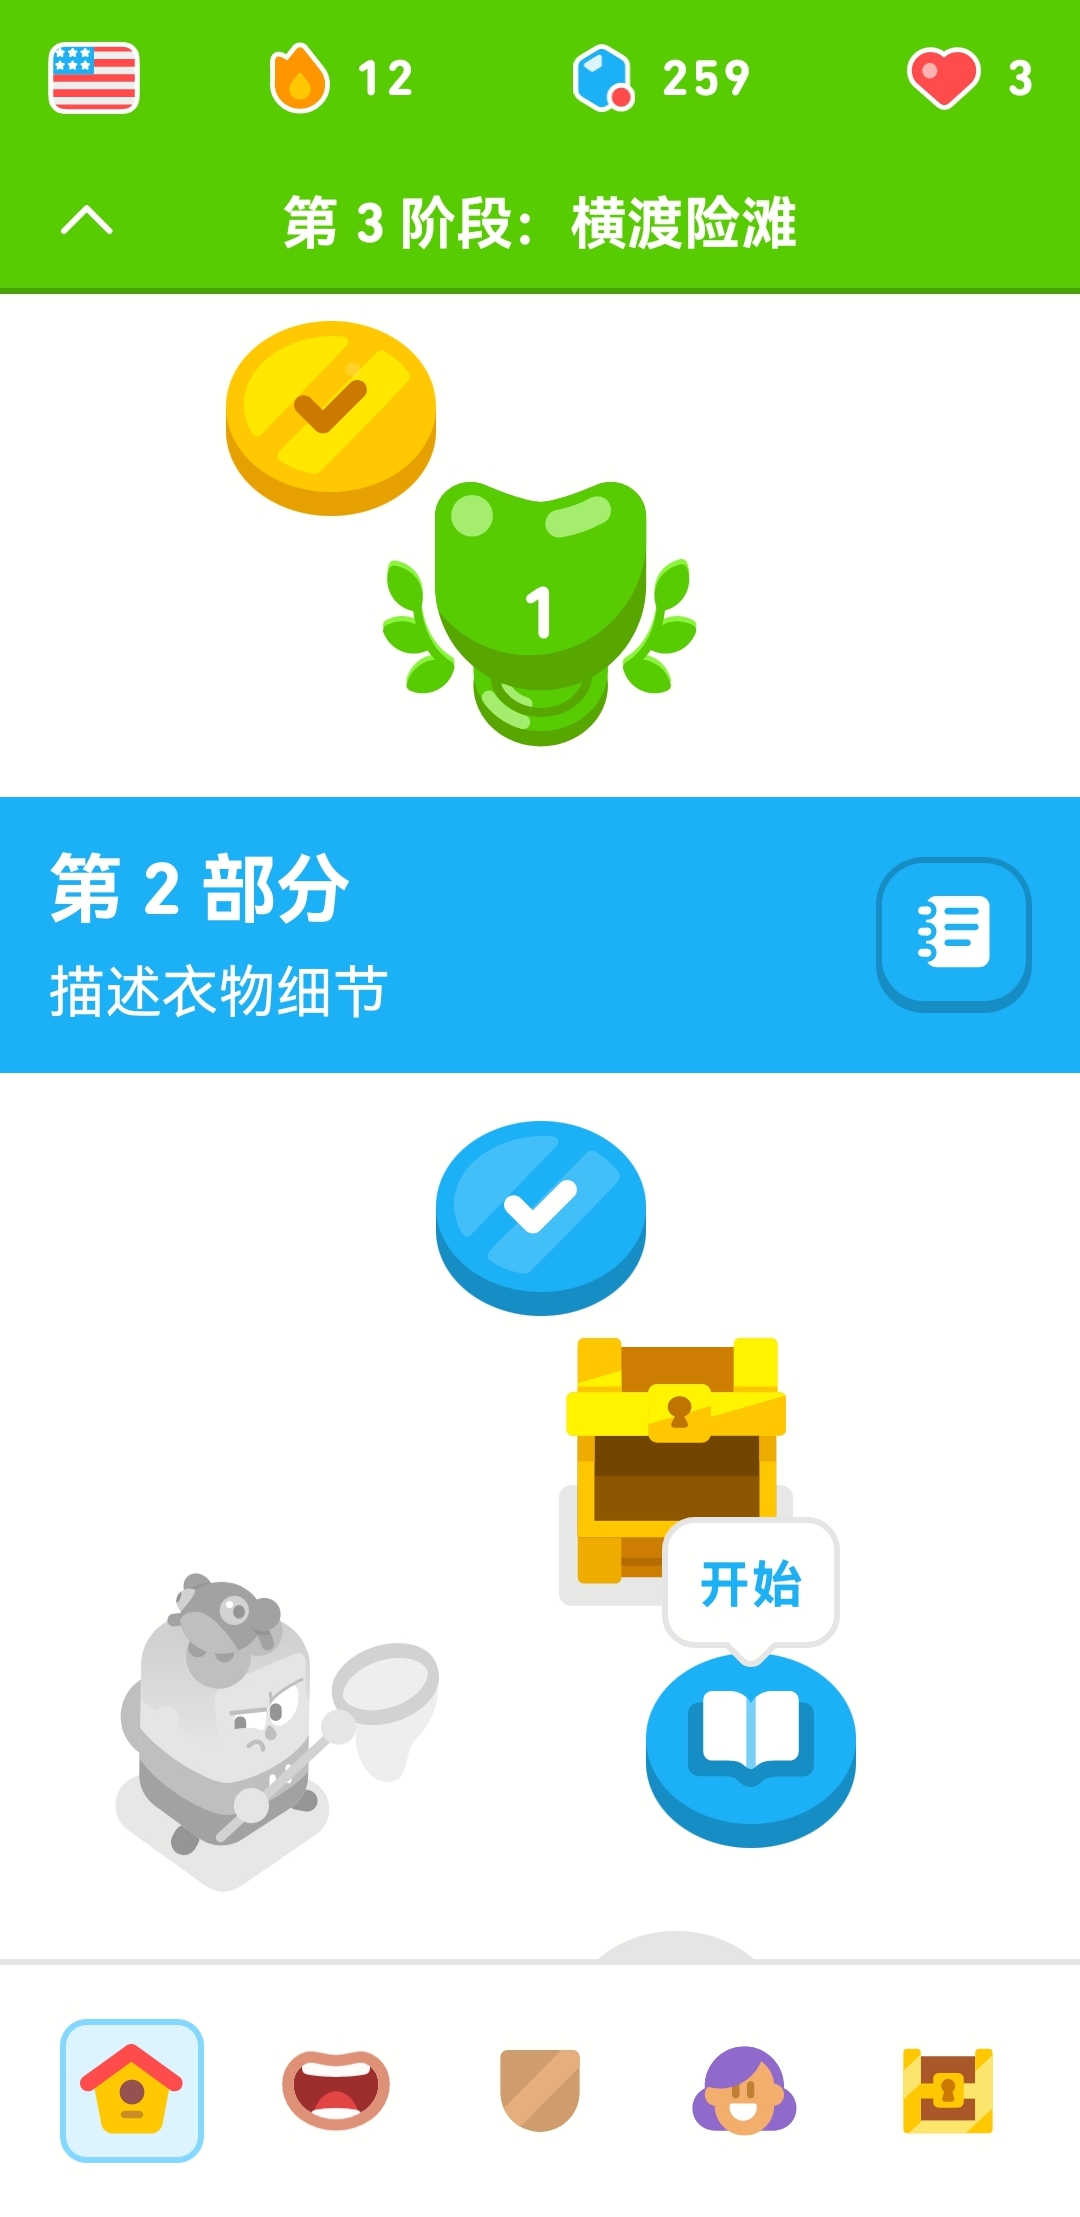 Duolingo App